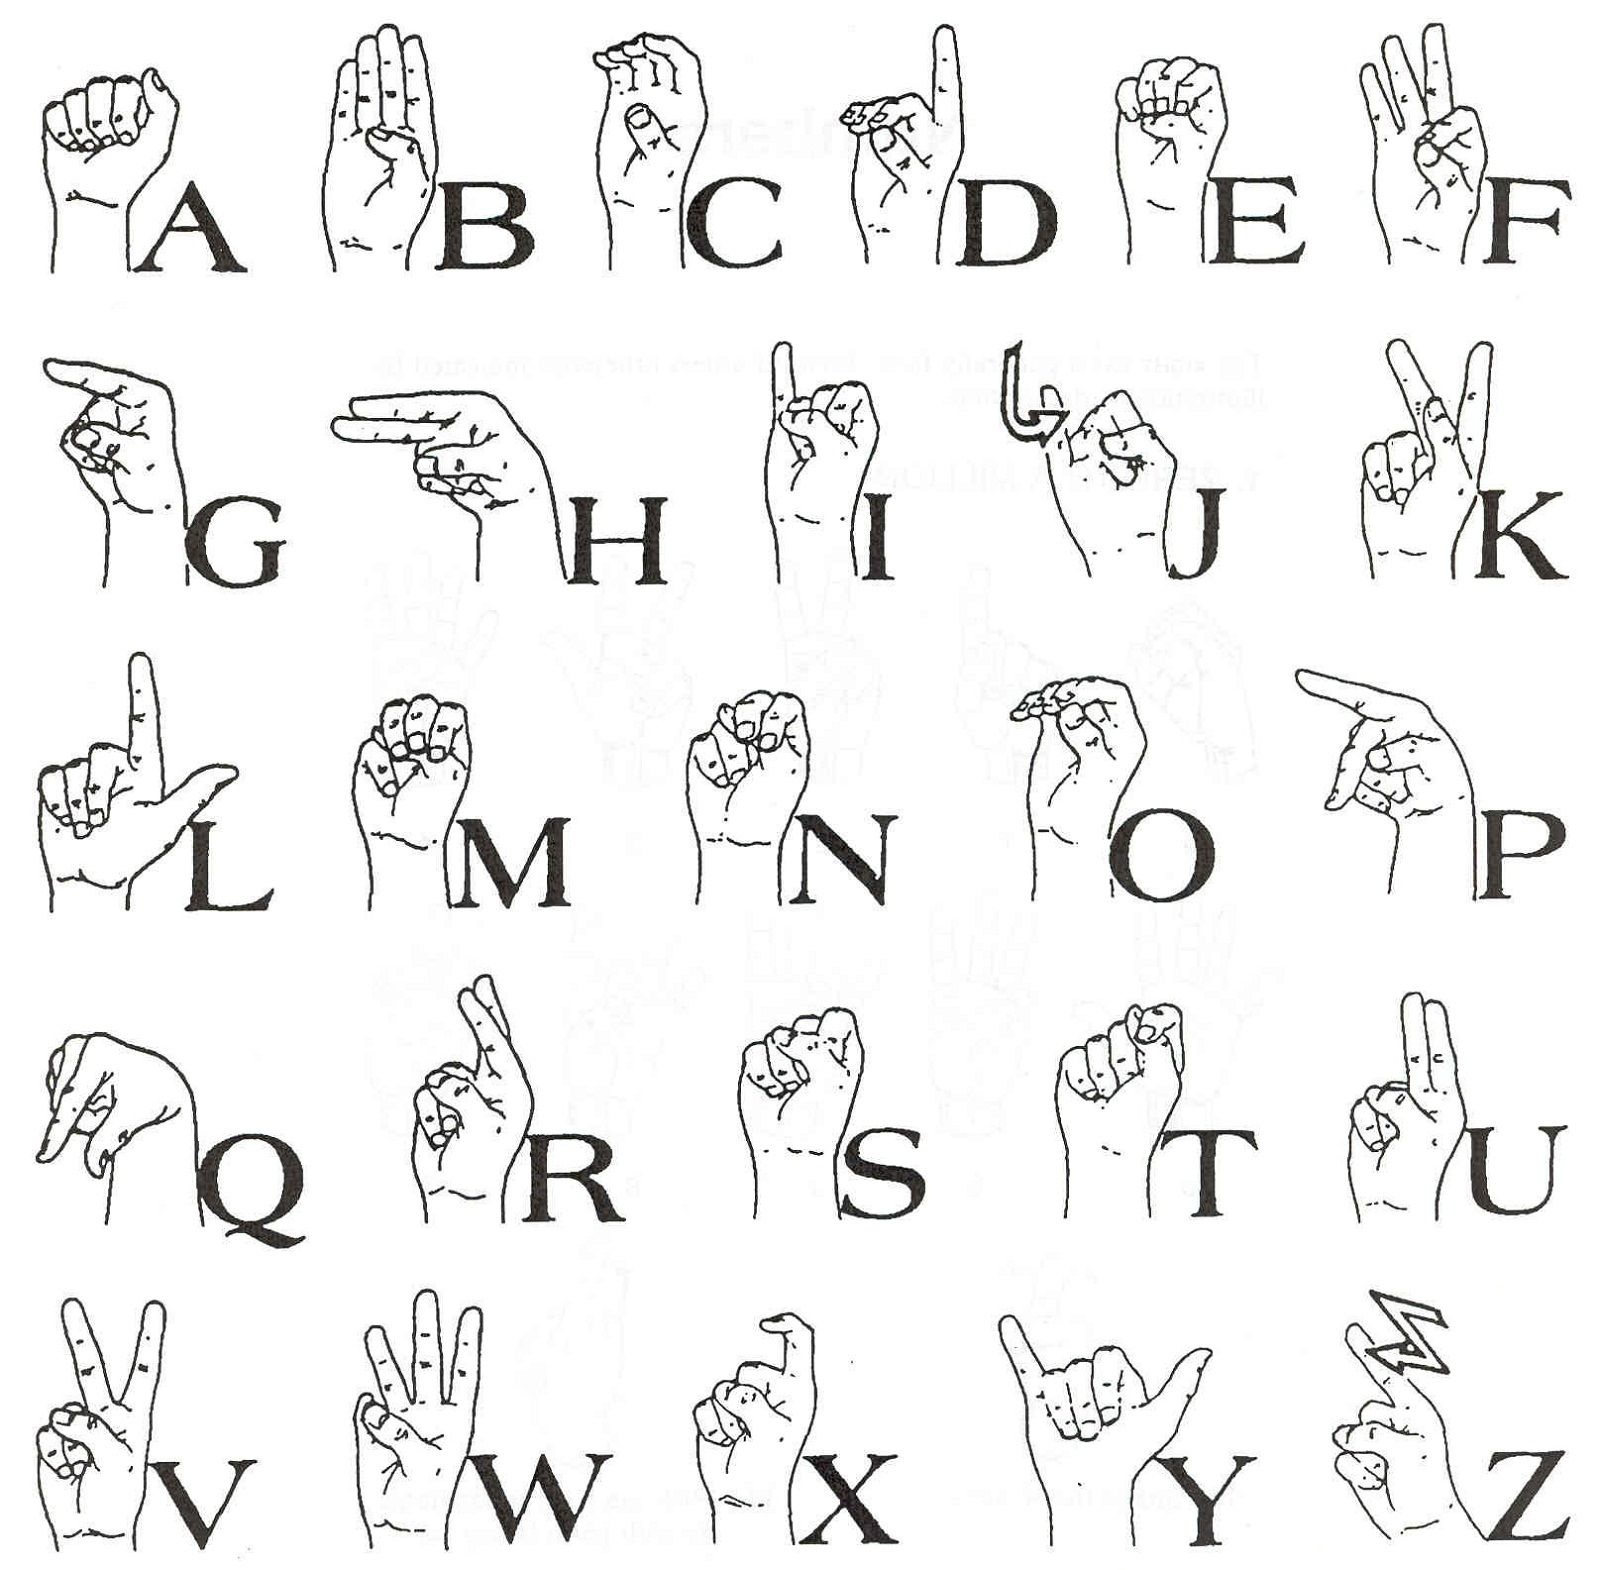 Sign Language Images Printable | Sign Language Chart | Sign Language - Free Printable Sign Language Dictionary